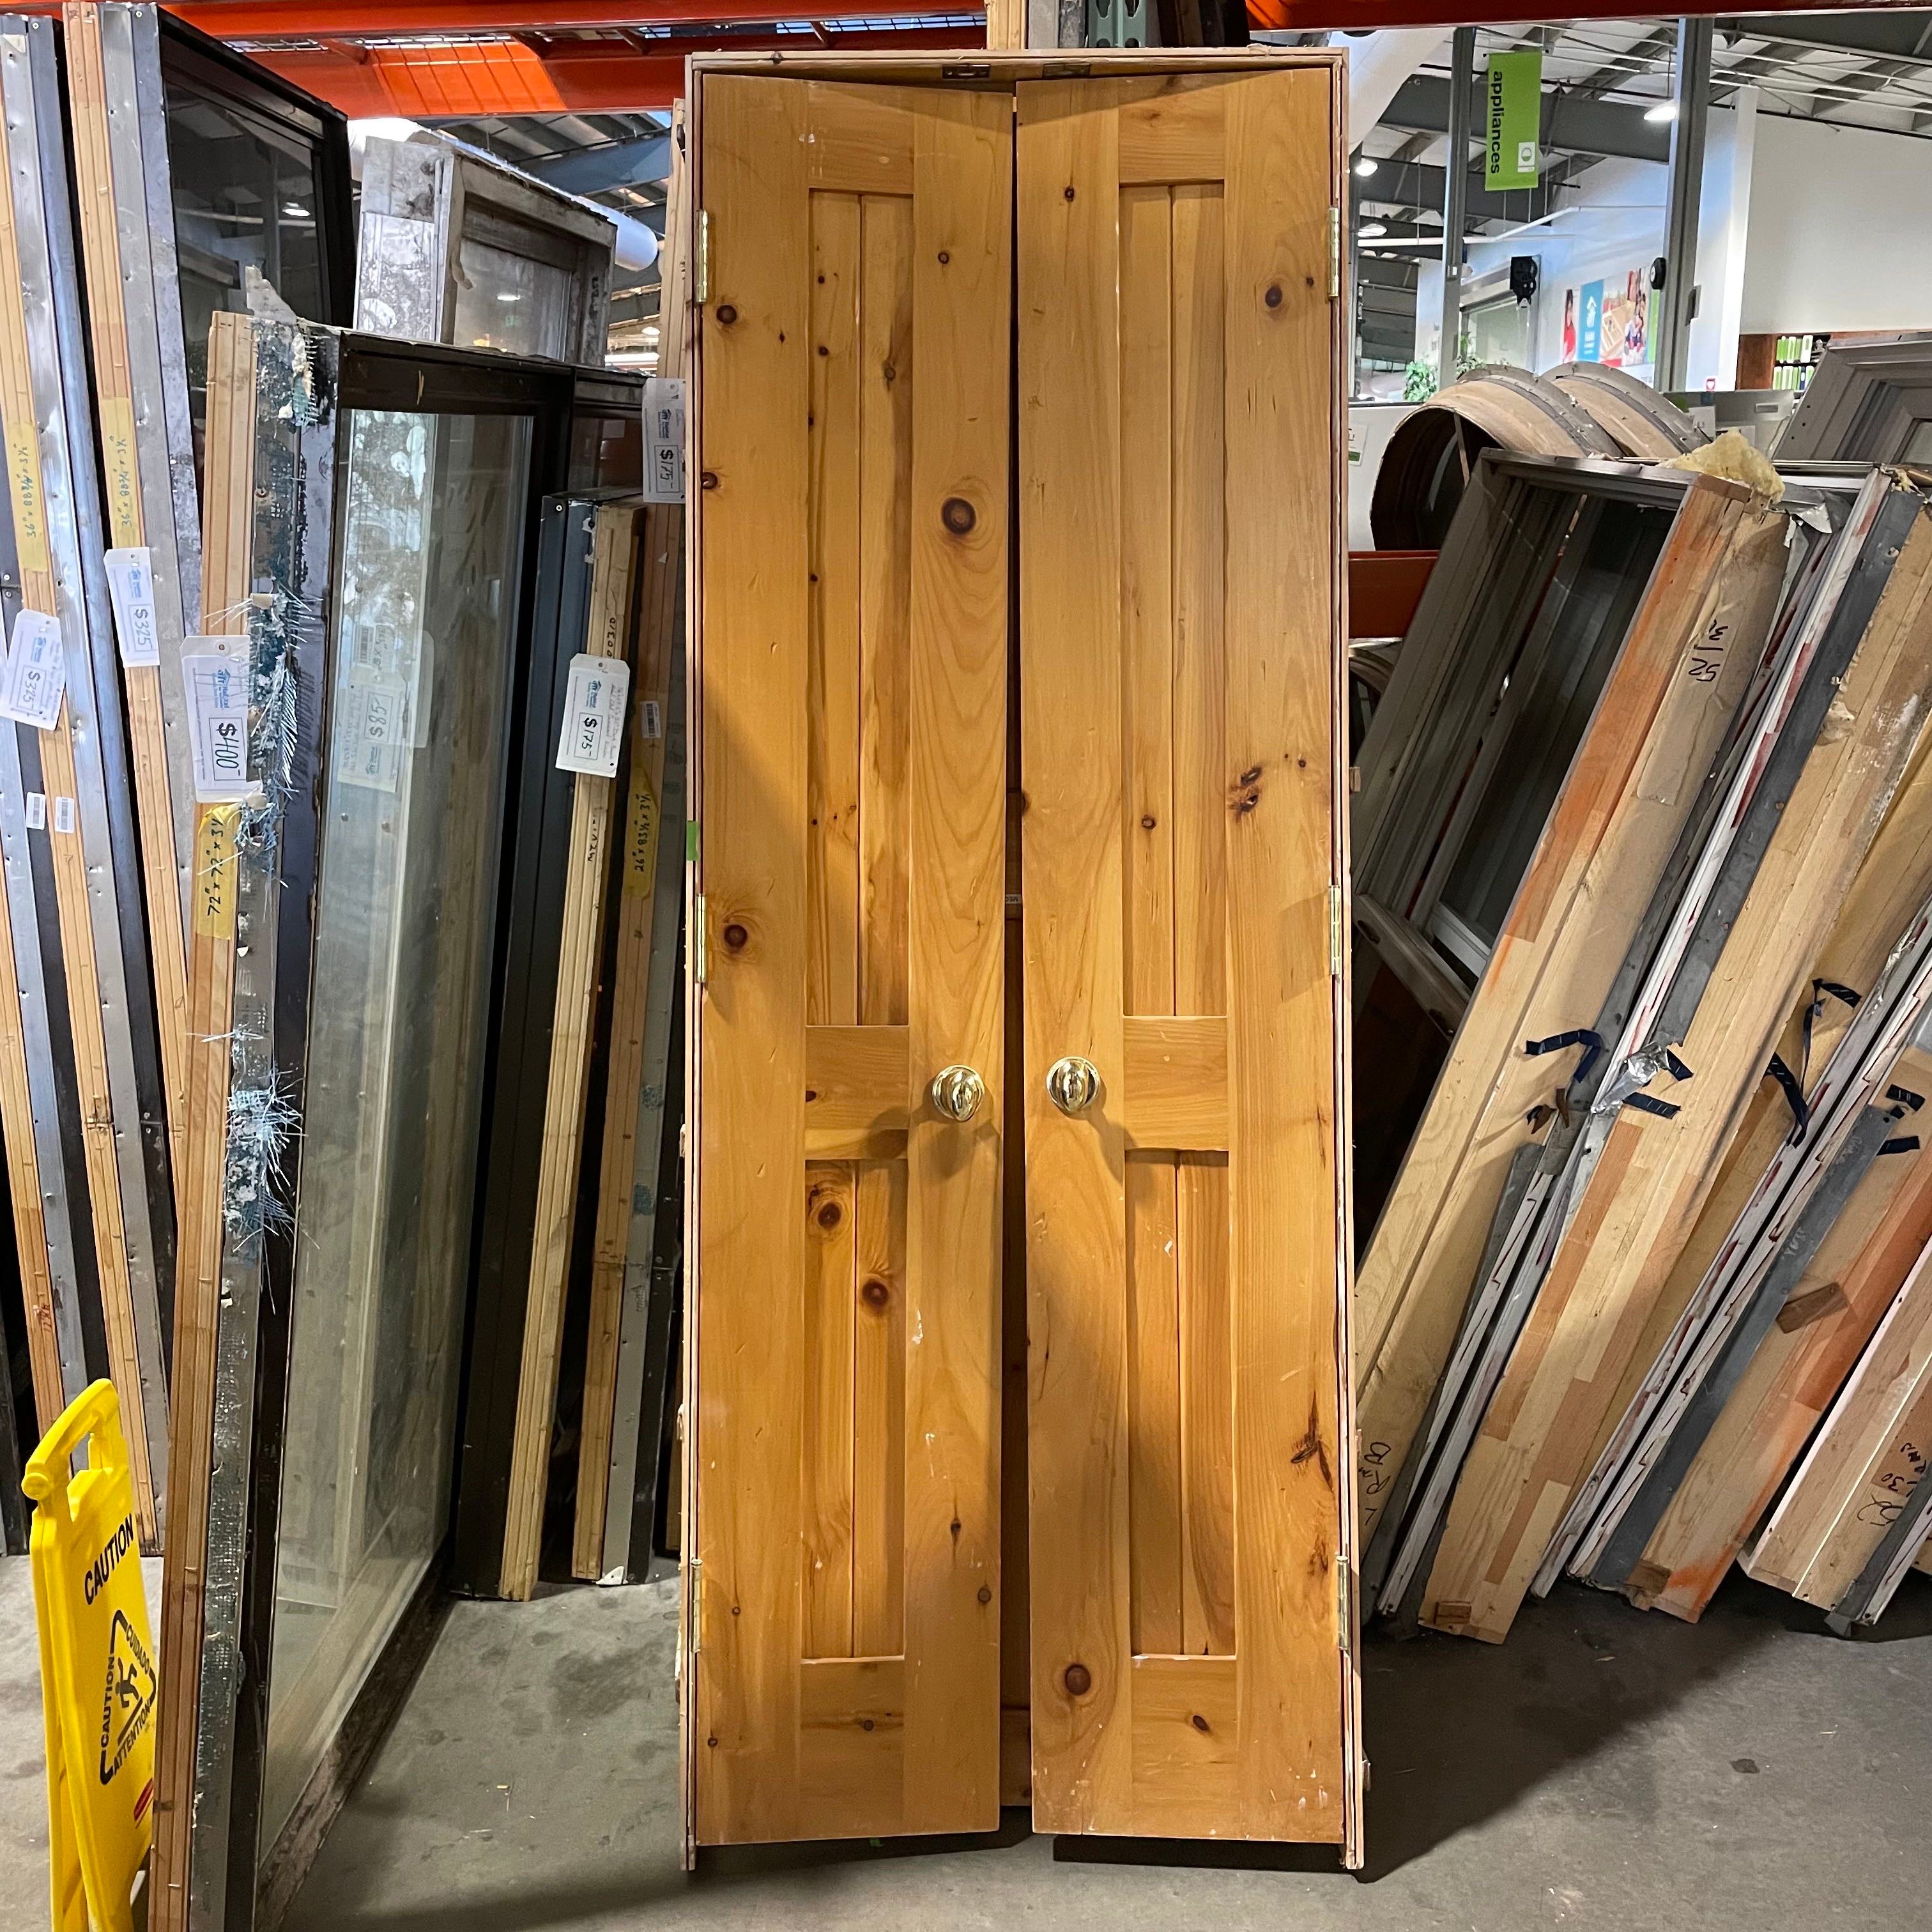 29.5"x 84"x 1.75" 2 Panel Wainscot Knotty Pine Honey Finish Set of Closet Doors w/ Jamb